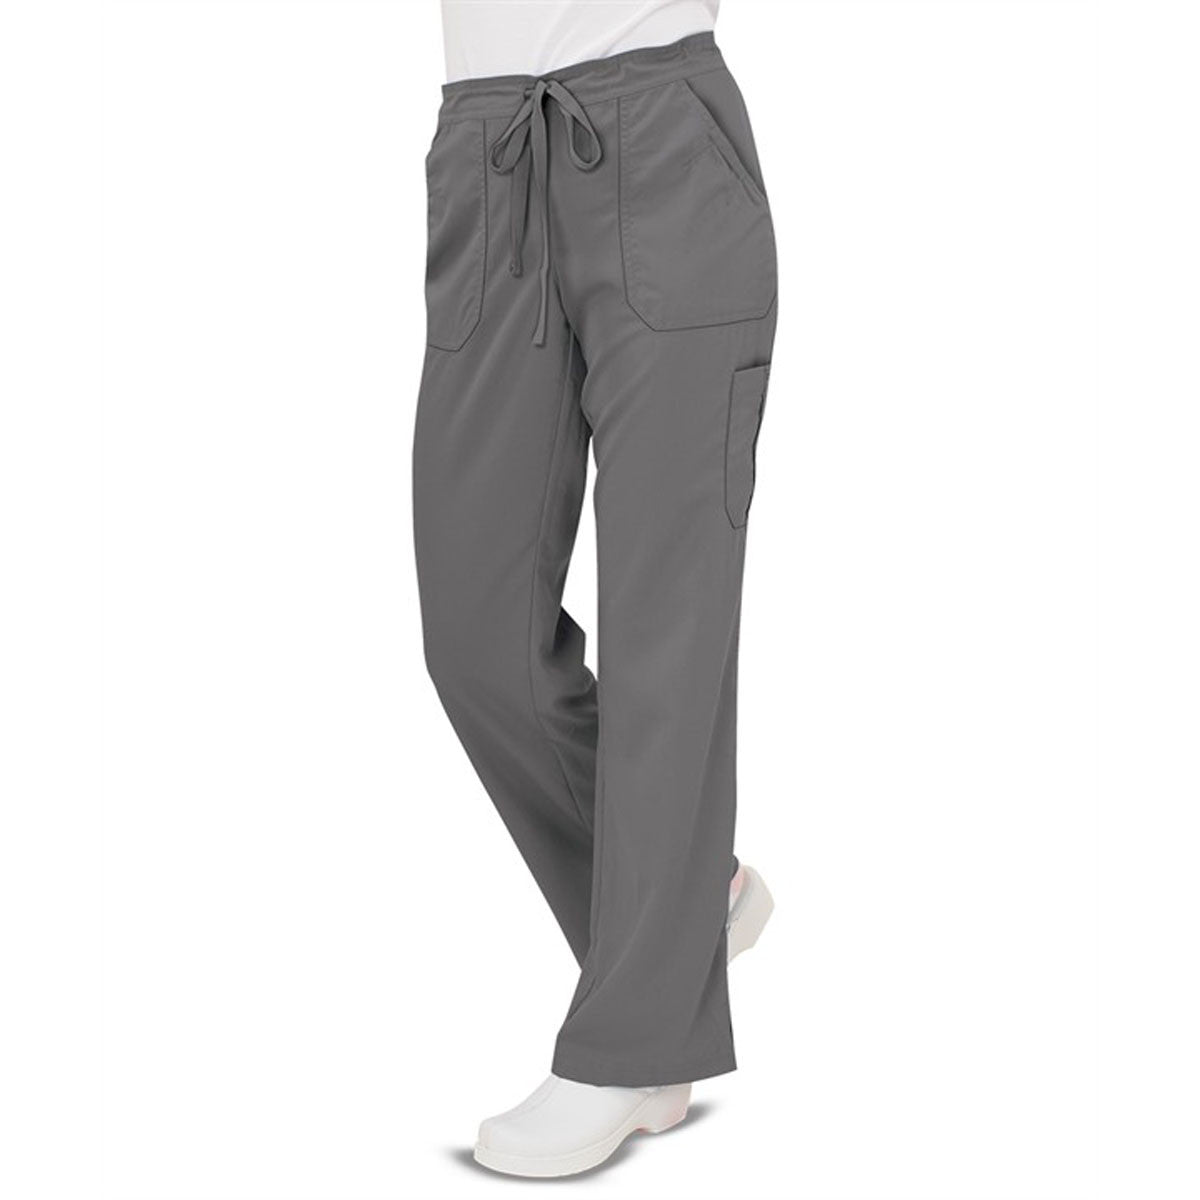 Grey's Anatomy Women's Nickel Scrub Pants Adult Small Nickel